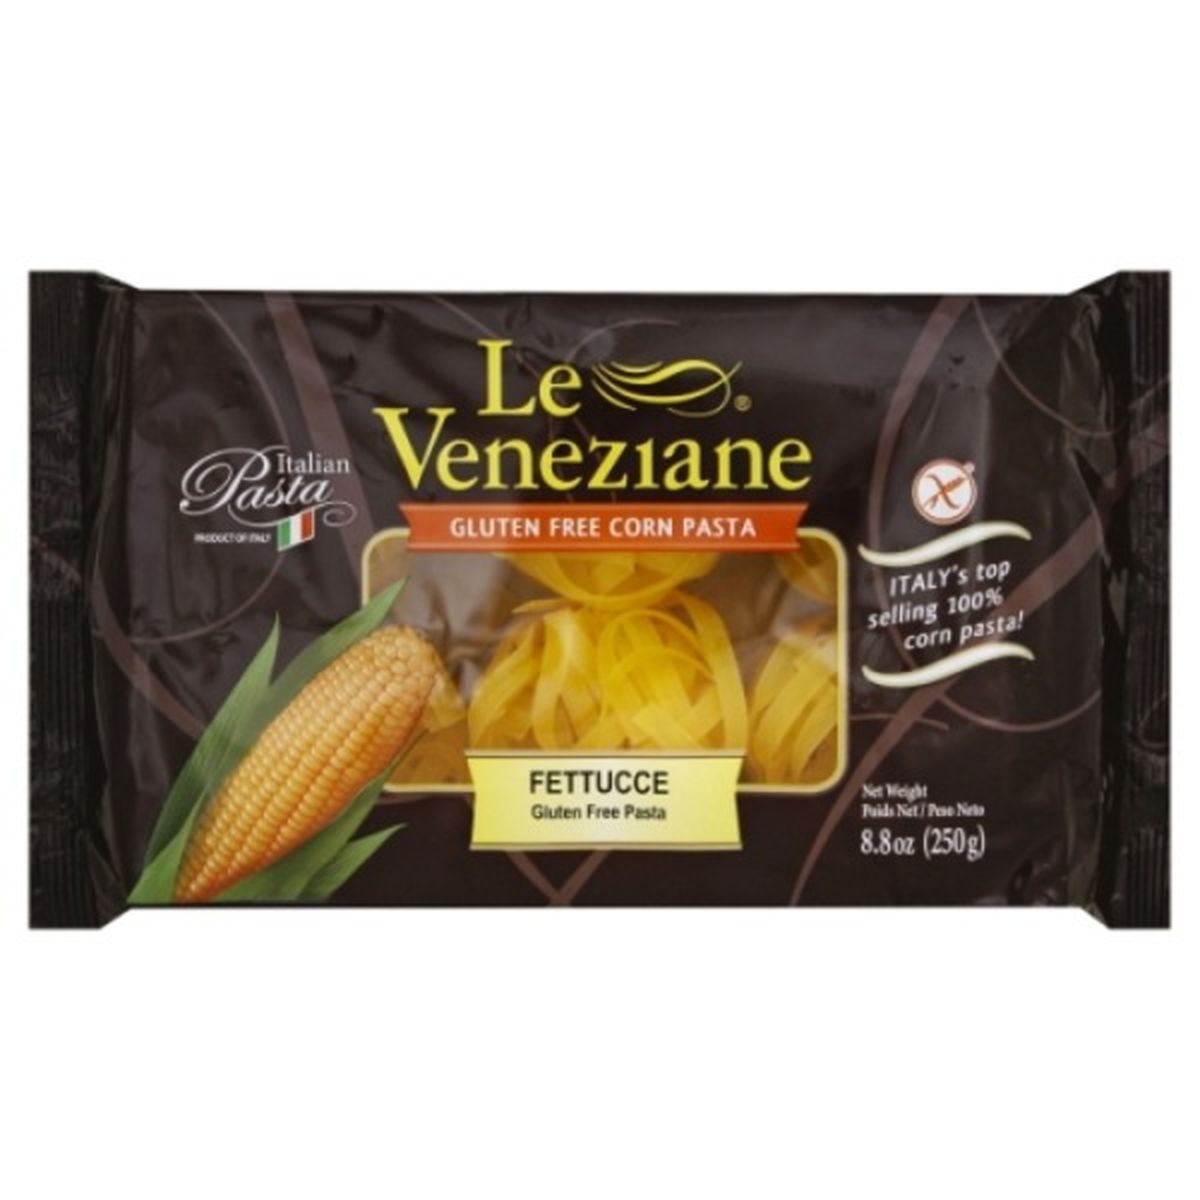 Calories in Le Veneziane Fettucce, Gluten Free, Corn